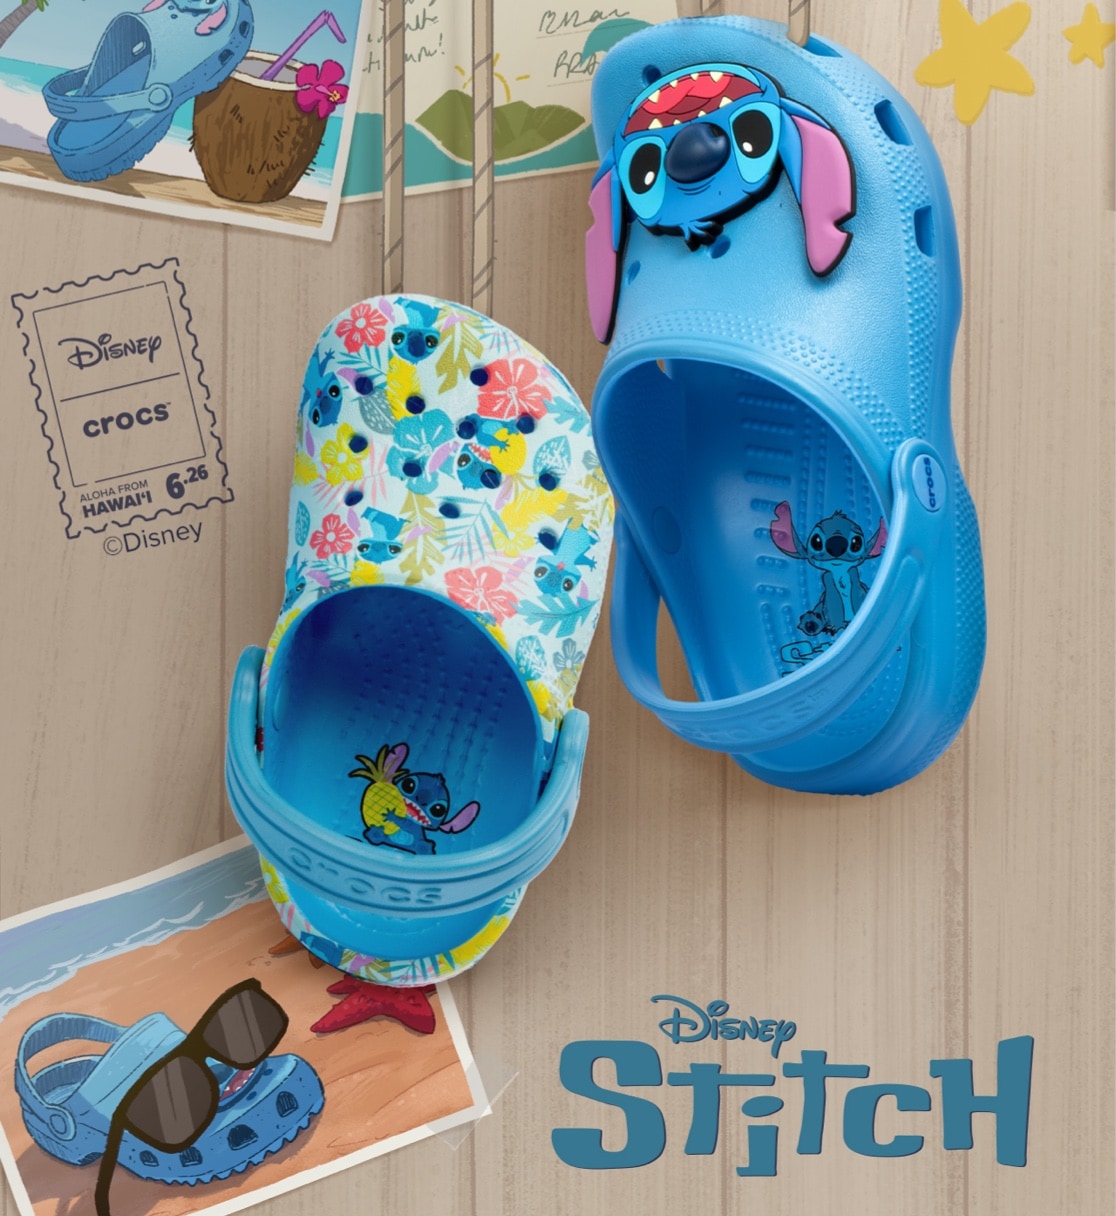 Disney Stitch crocs for adults and kids